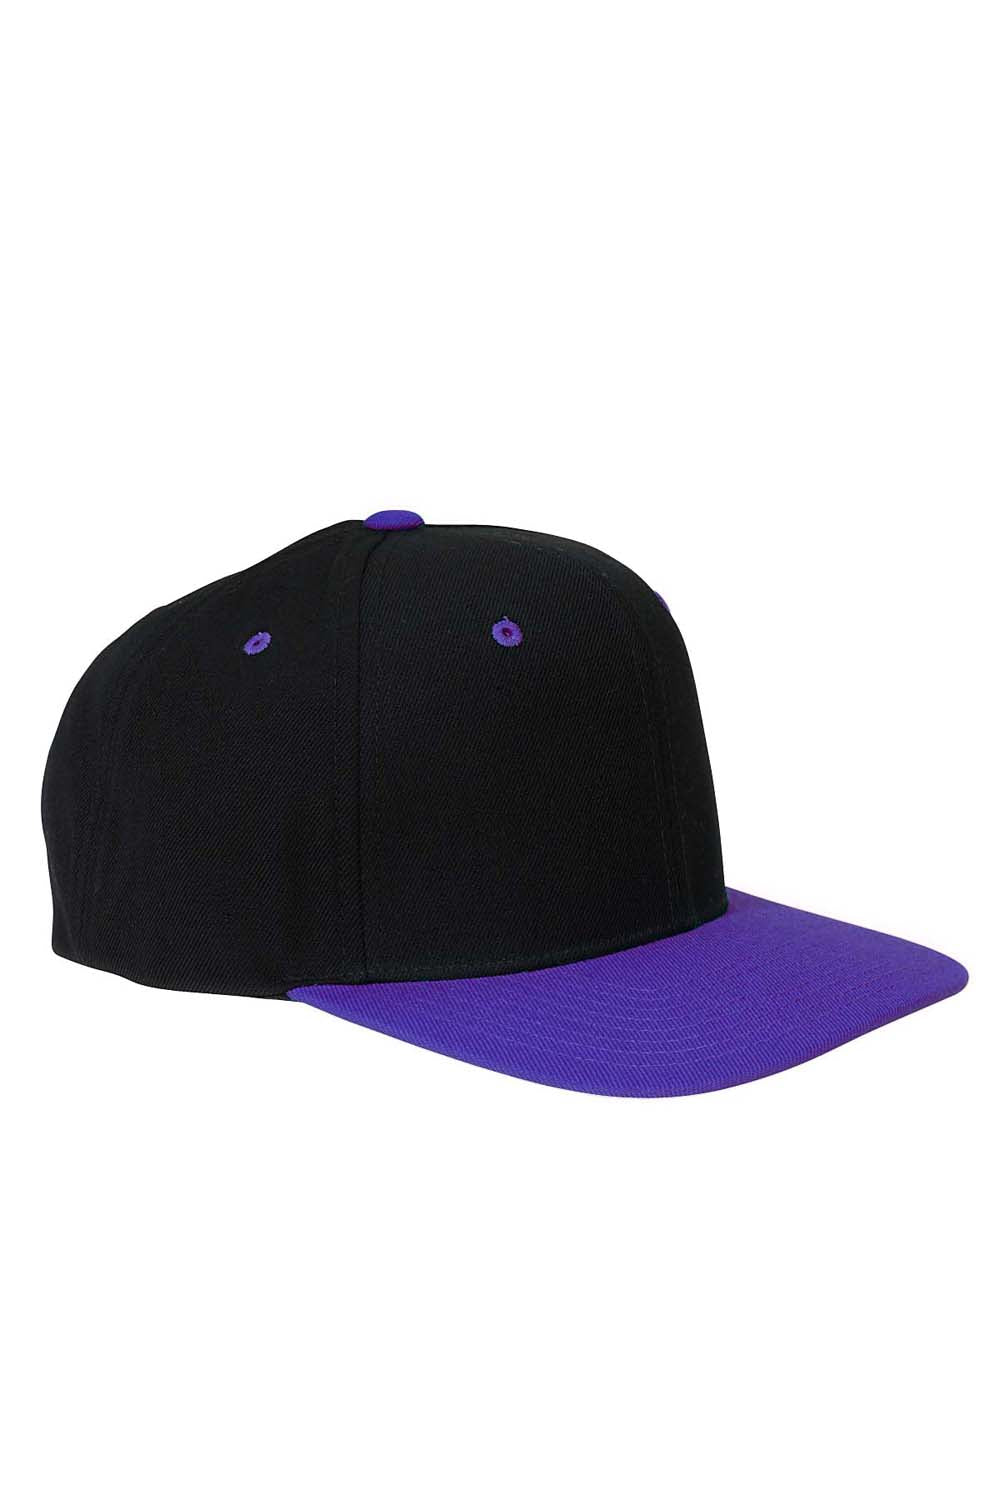 Yupoong 6089 Mens Adjustable Hat Black/Purple Front